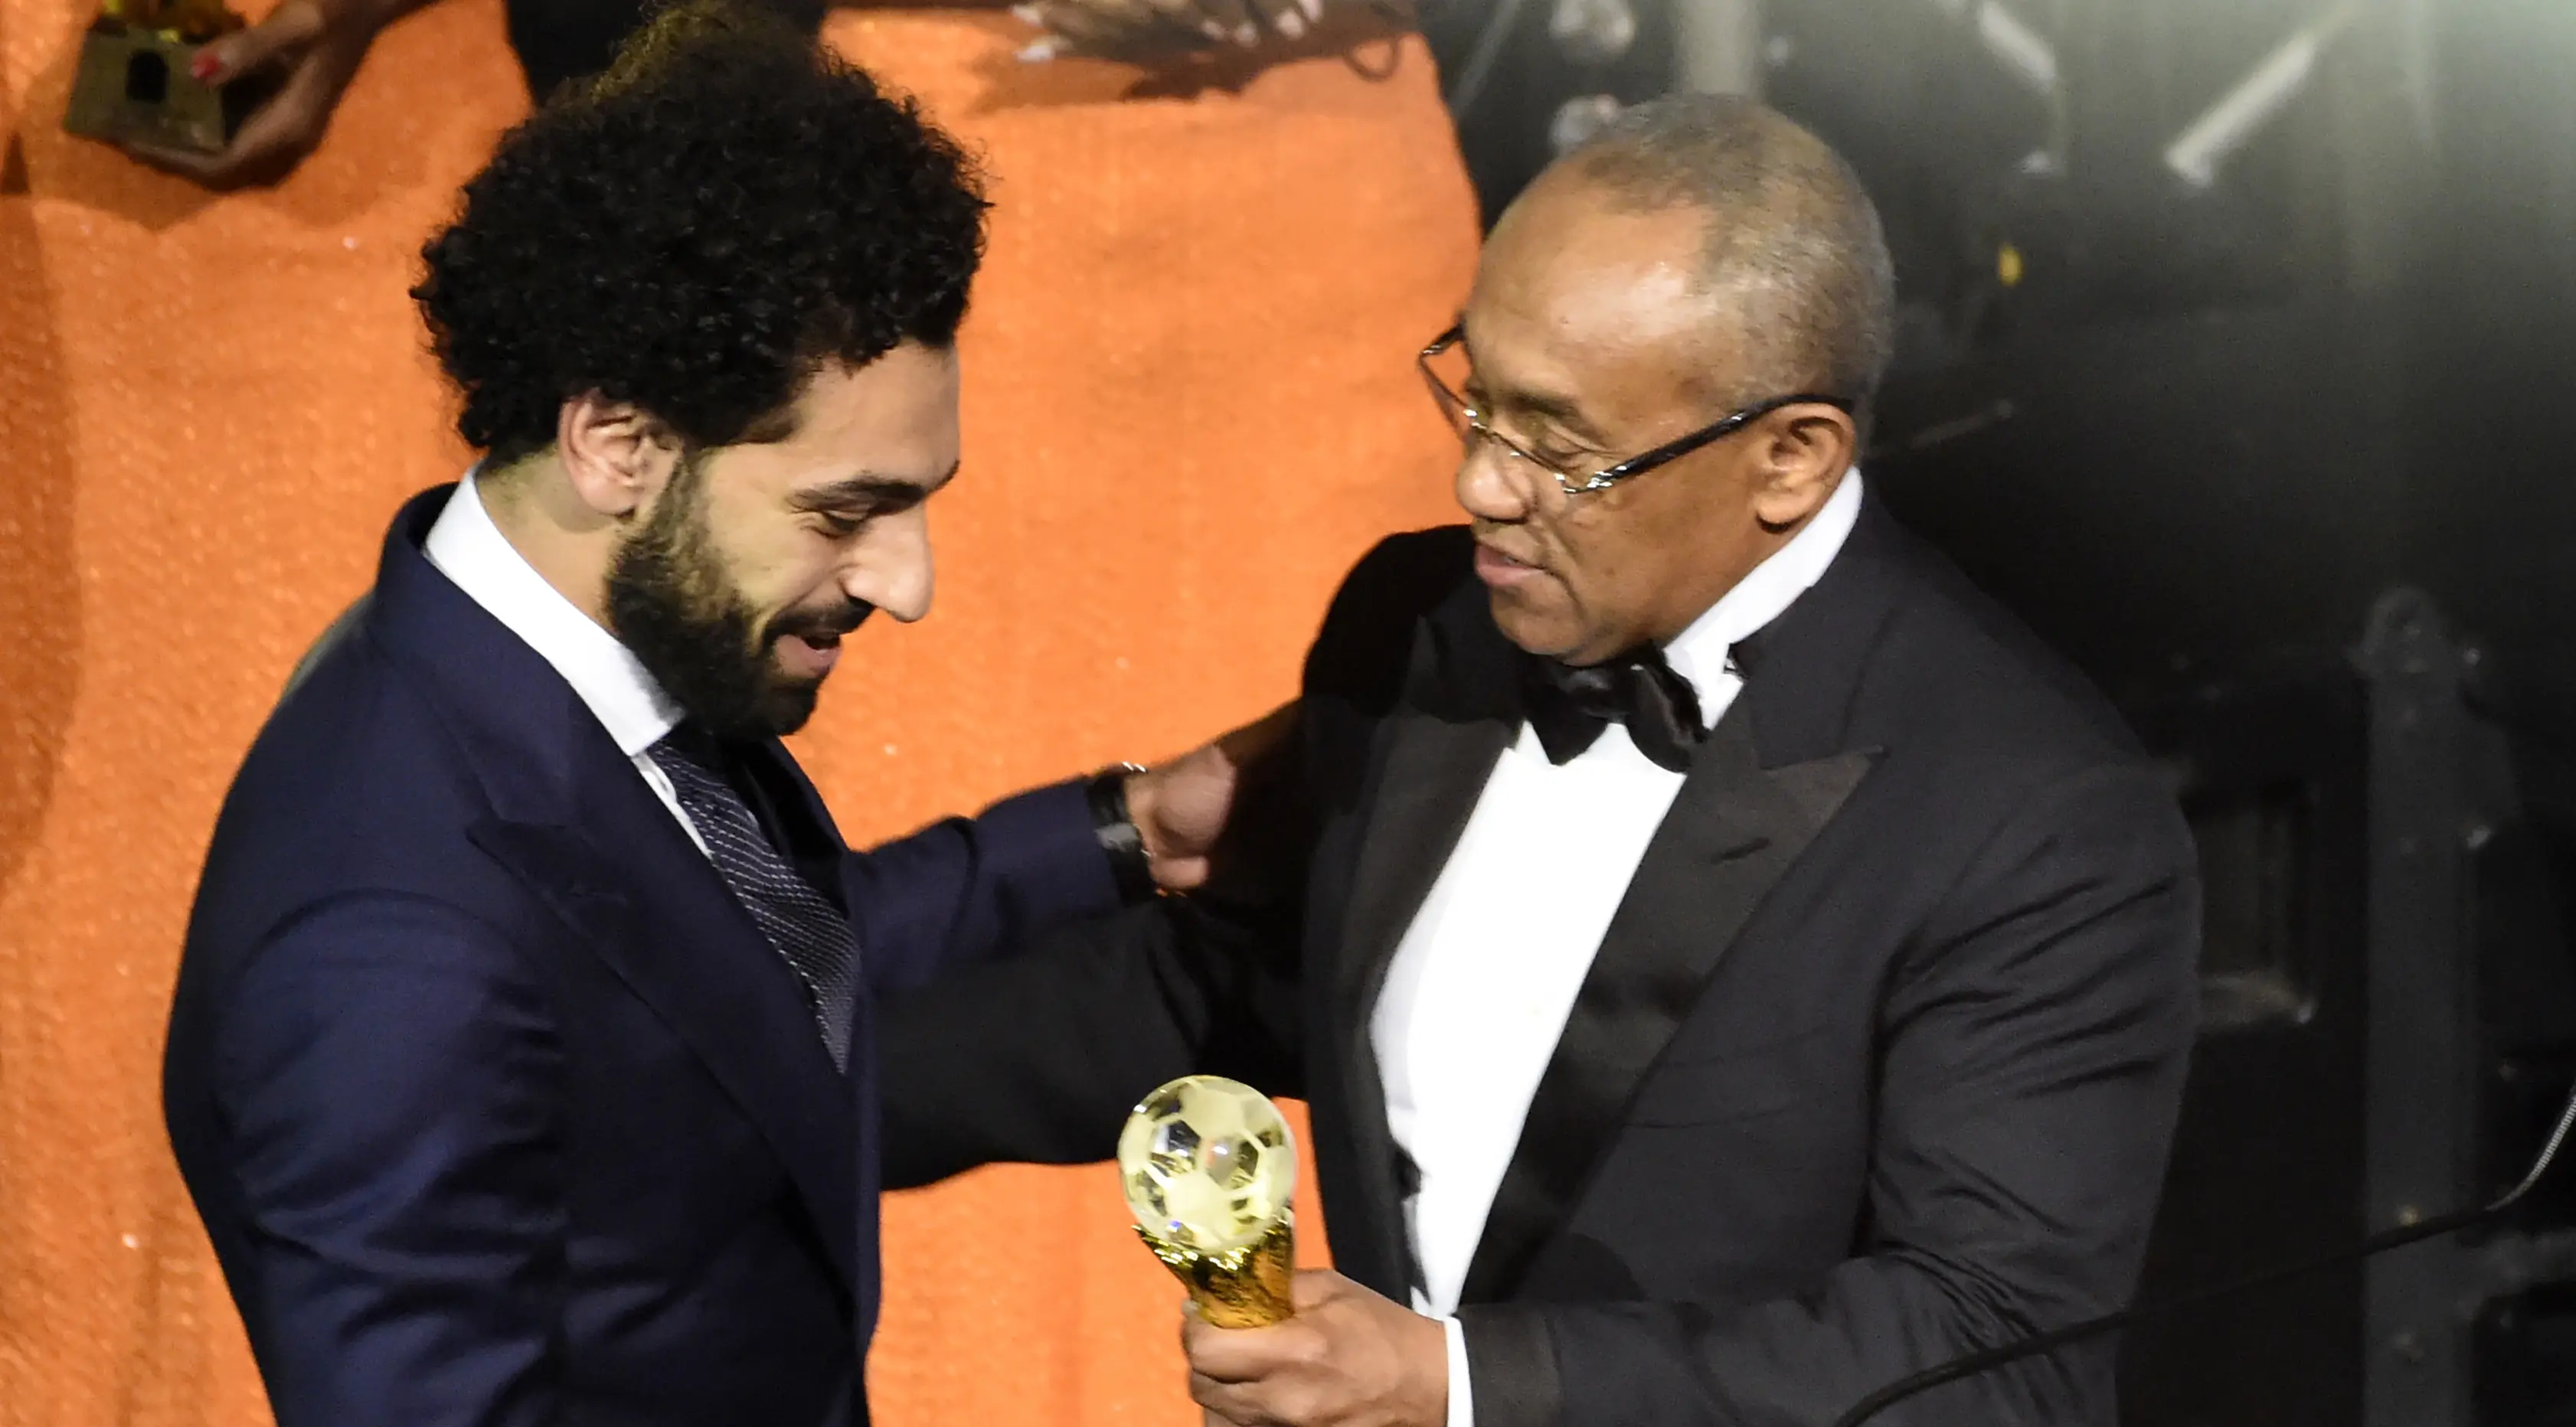 Presiden CAF Ahmad Ahmad memberi trofi Pemain Terbaik Afrika 2017 kepada Mohamed Salah pada acara penghargaan tahunan Konfederasi Sepak Bola Afrika (CAF) di Ghana, Kamis (4/1) (PIUS UTOMI EKPEI/AFP)